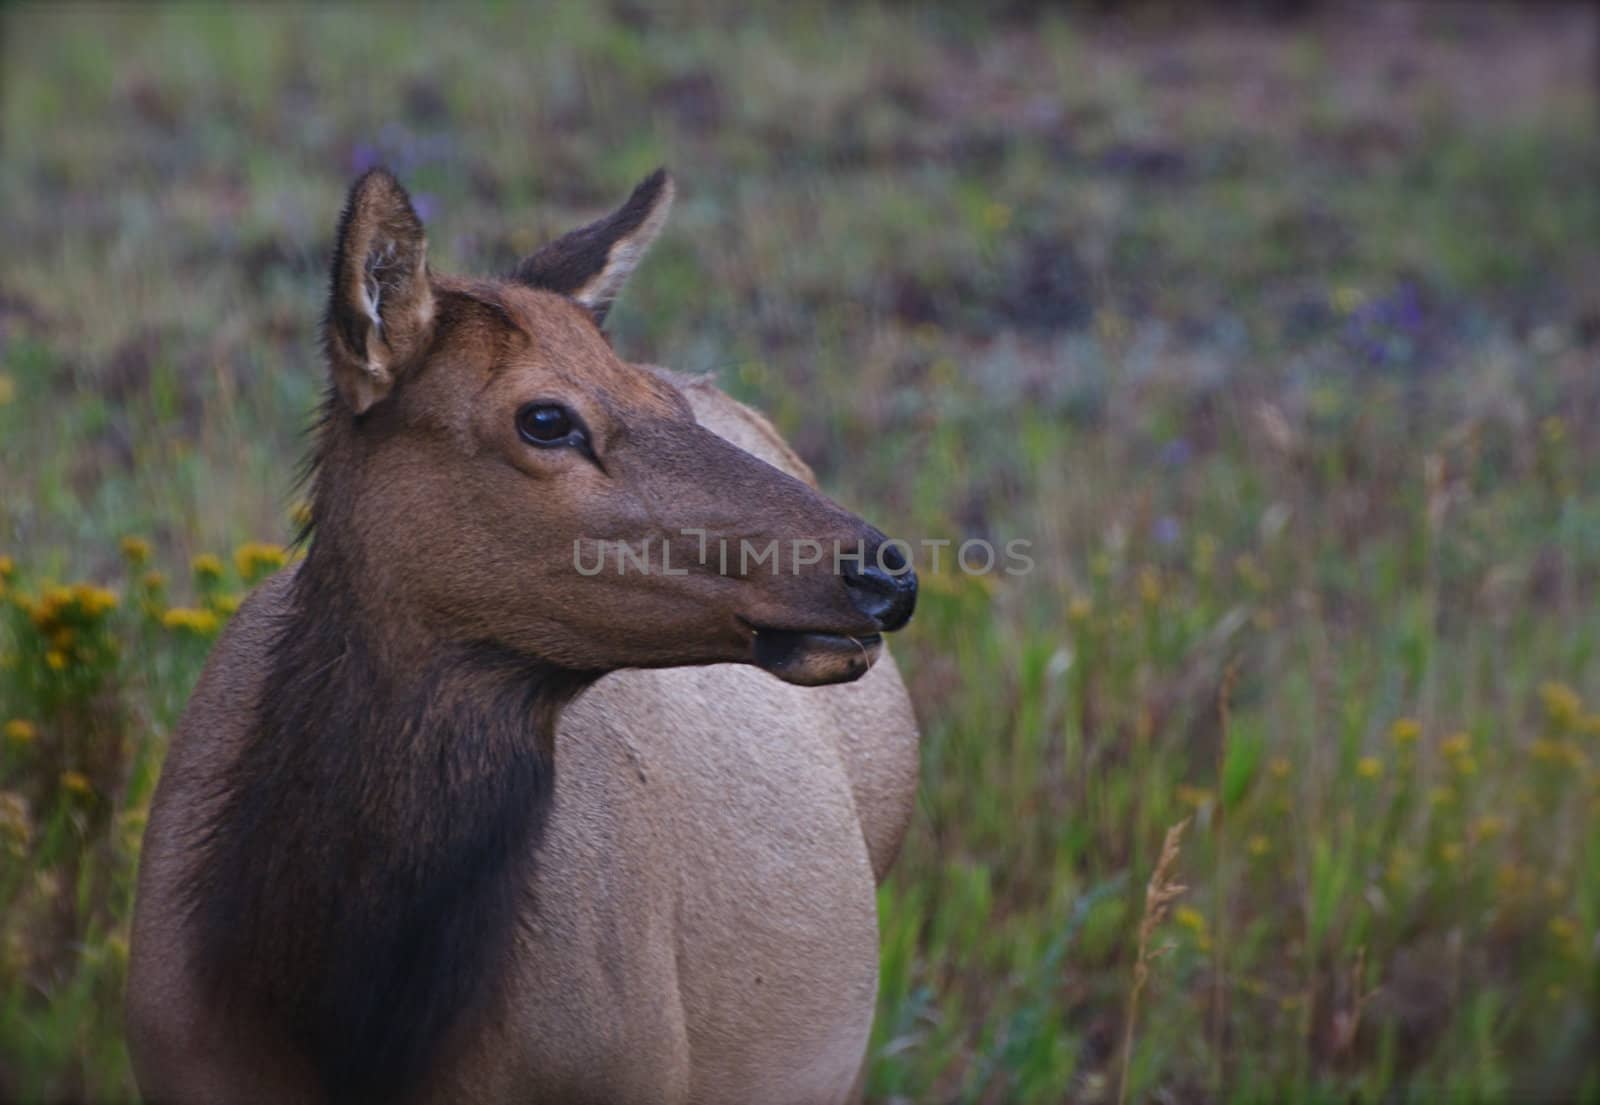 Female Elk in Repose by gilmourbto2001